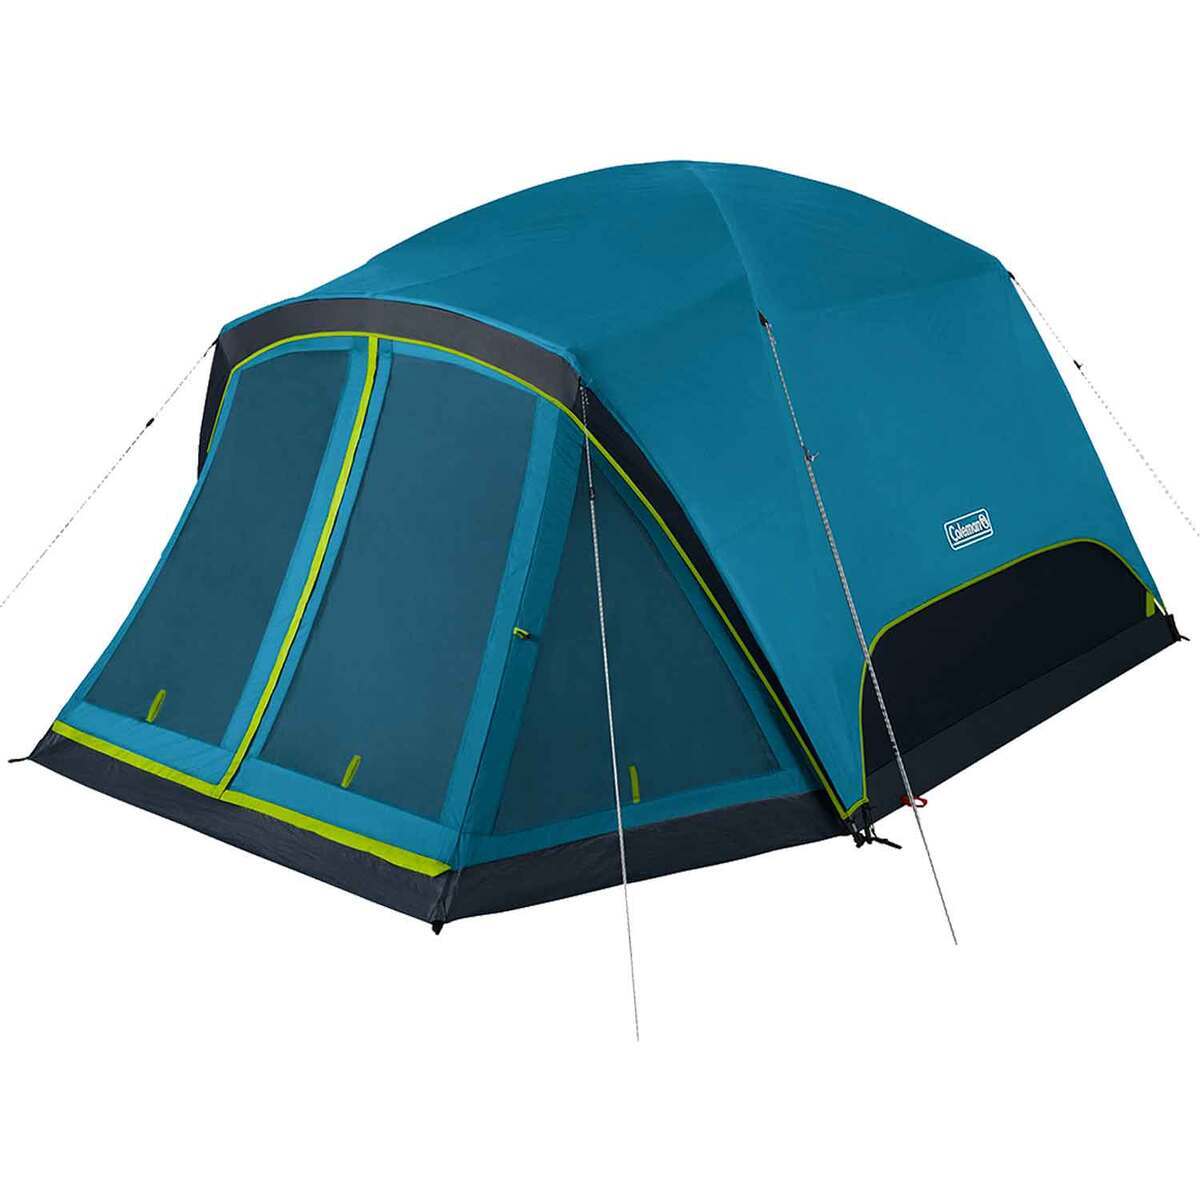 Coleman Skydome 6 Person Screen Room Camping Tent With Dark Room Navy Blue 1752030 1 ?context=bWFzdGVyfGltYWdlc3w1NDAxMXxpbWFnZS9qcGVnfGg2NS9oNWQvMTA3OTgxNzA2MDM1NTAvMTc1MjAzMC0xX2Jhc2UtY29udmVyc2lvbkZvcm1hdF8xMjAwLWNvbnZlcnNpb25Gb3JtYXR8Y2UyYjQxYjg5ODg5NjlkMGIxYjAwNmI0ZGYxMjAzM2RiOWE5NzZlZDI0YzM1MTFkNzQ4NDc0OGIwOGFlN2I3Ng